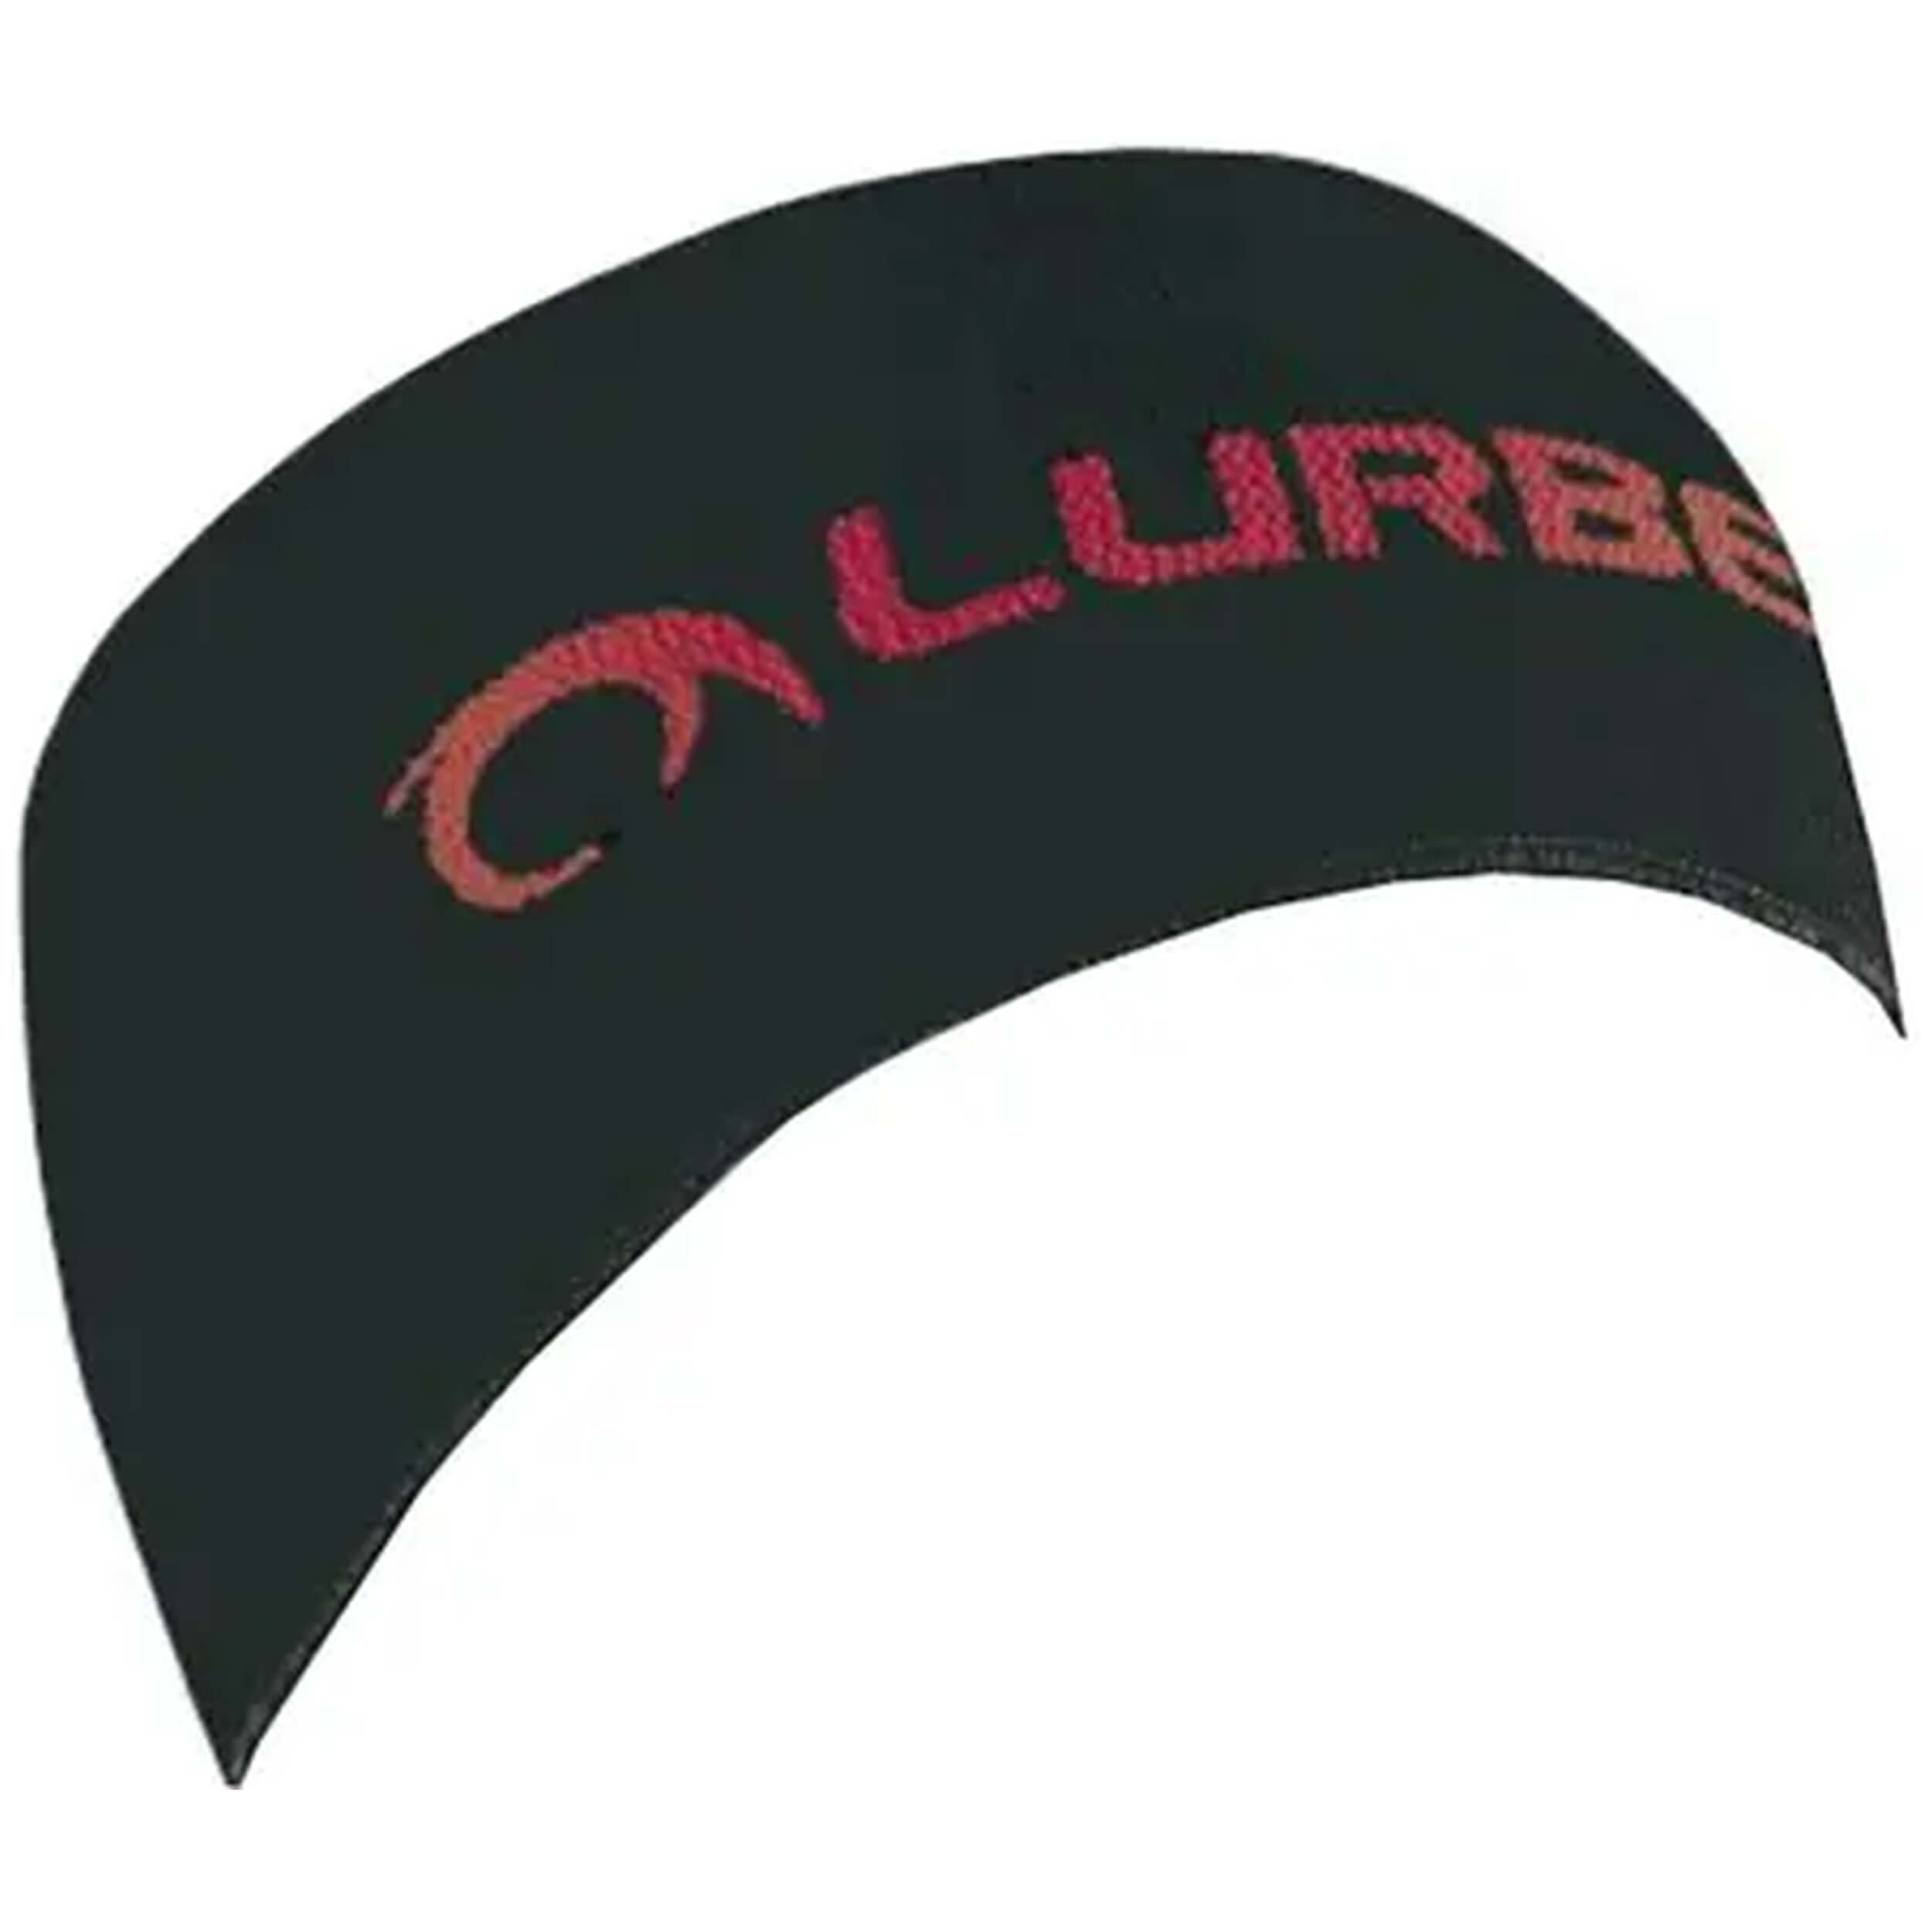 Lurbel - Textil Deporte marca Lurbel modelo 00B7.750U.0005 para unisex en color negro